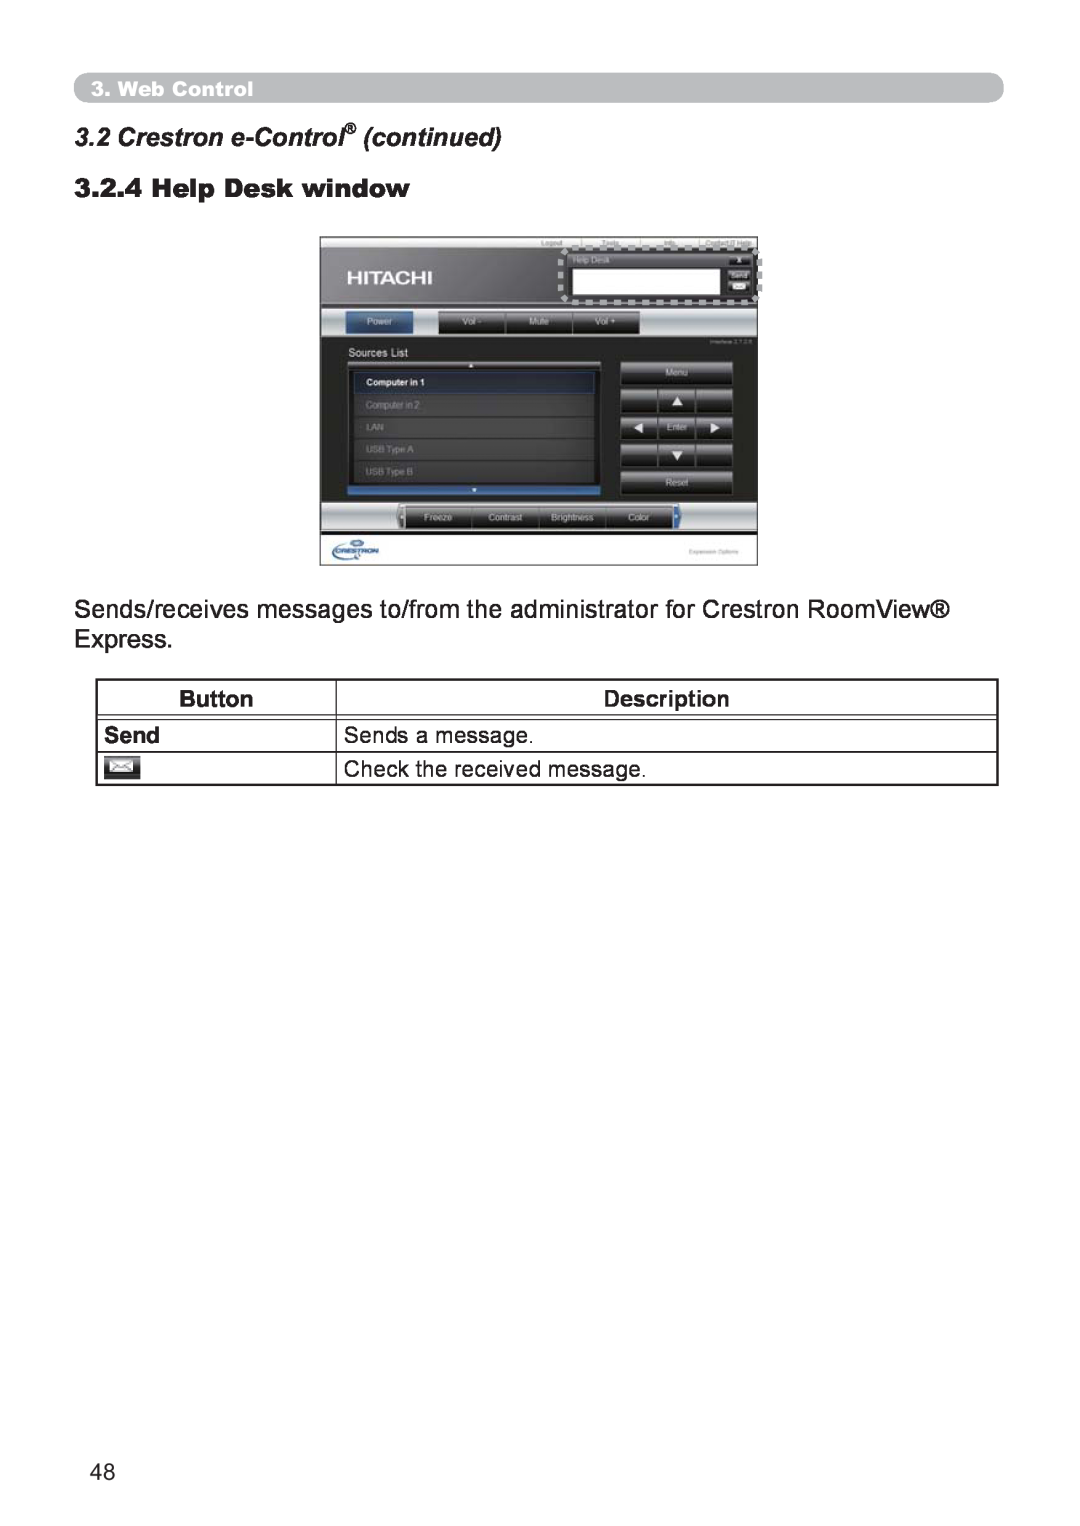 Hitachi CP-X3021WN Crestron e-Control continued, Help Desk window, Button, Description, Sends a message, Web Control 